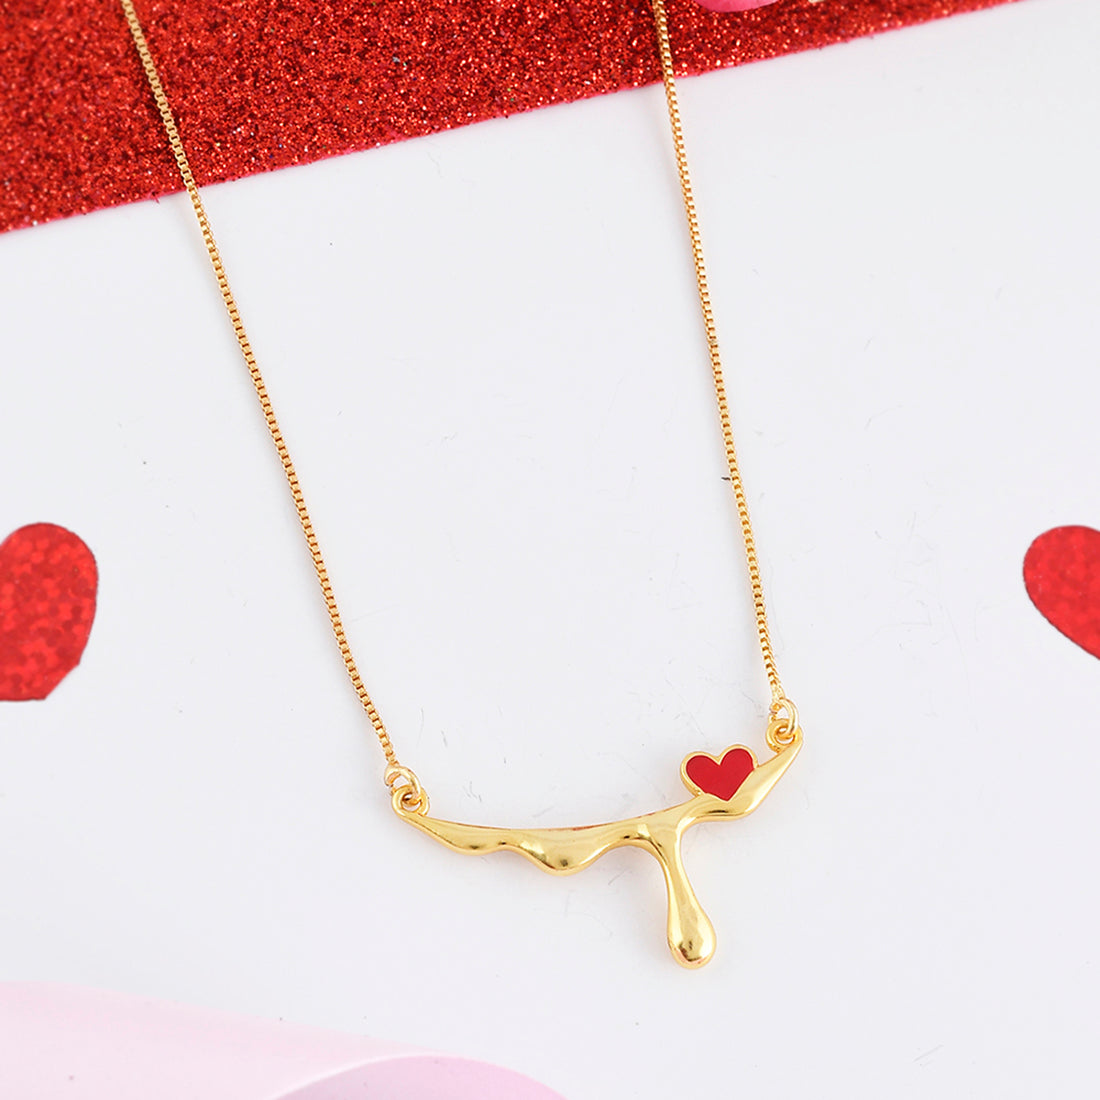 Women's Tiny Red Heart Necklace - Voylla